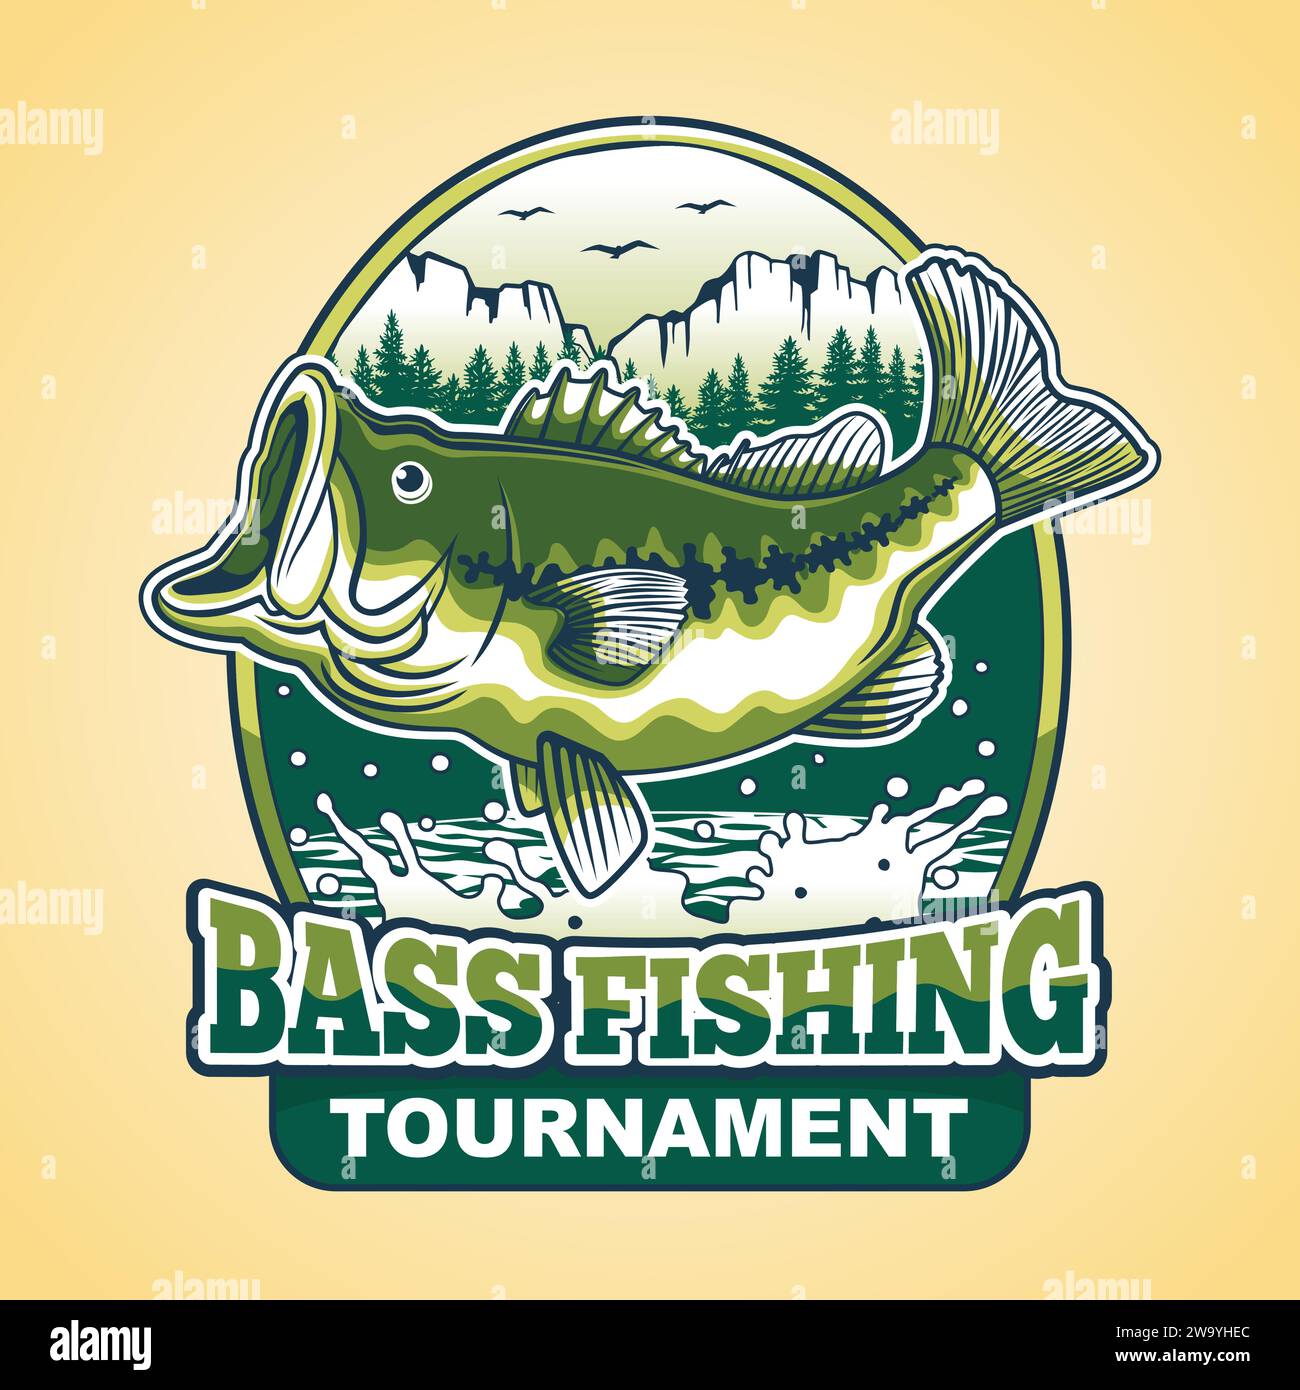 https://c8.alamy.com/comp/2W9YHEC/bass-fishing-tournament-logo-design-2W9YHEC.jpg